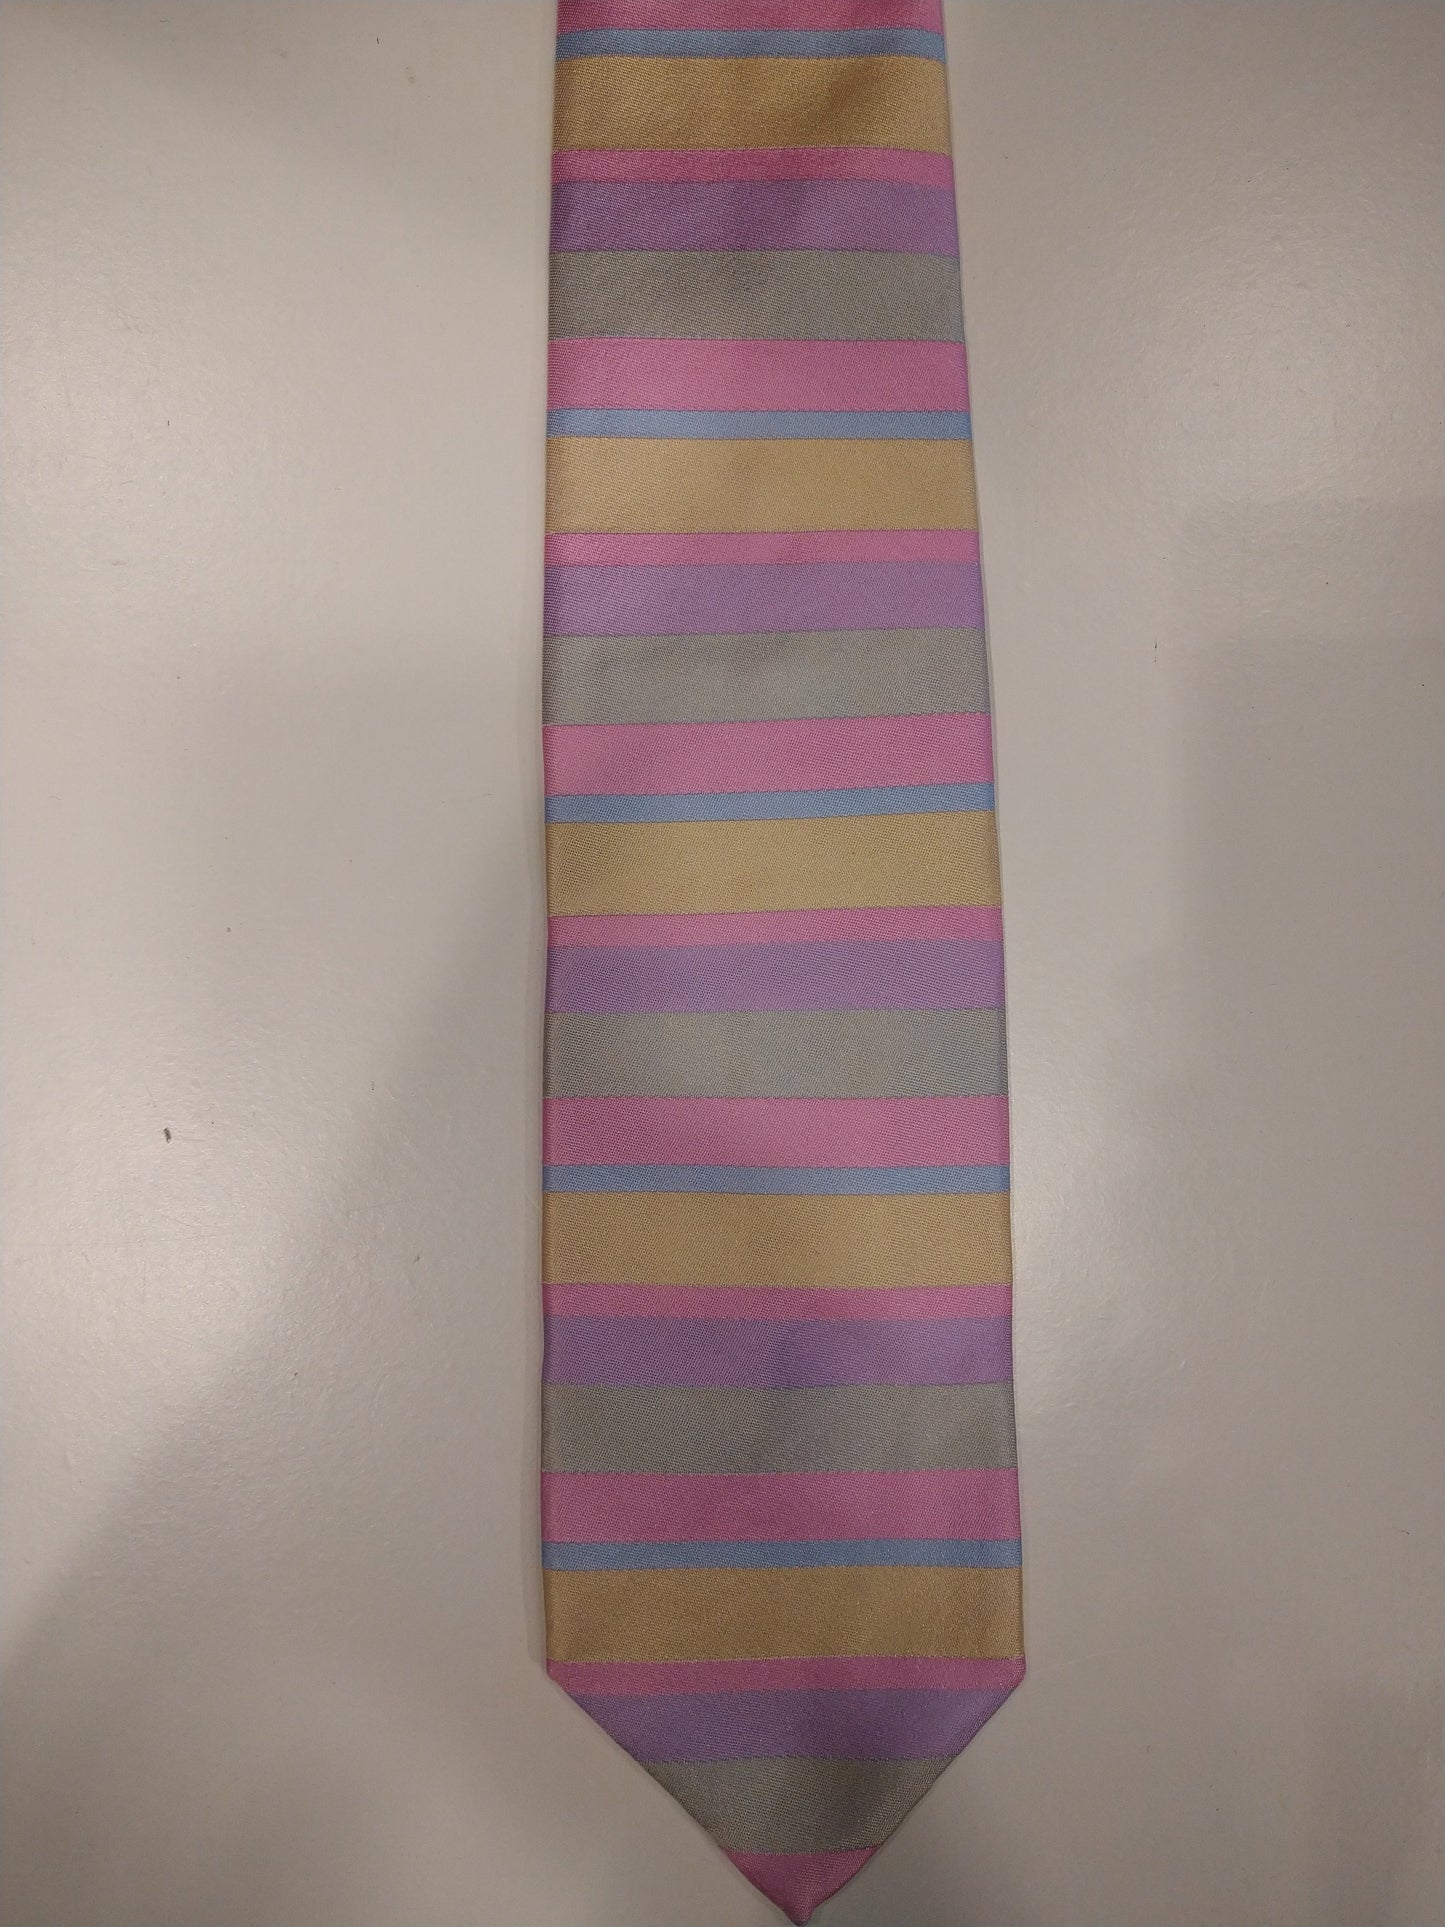 La mano de Jay Pee hecha con corbata de seda como. Rosa / púrpura / azul / amarillo rayado.